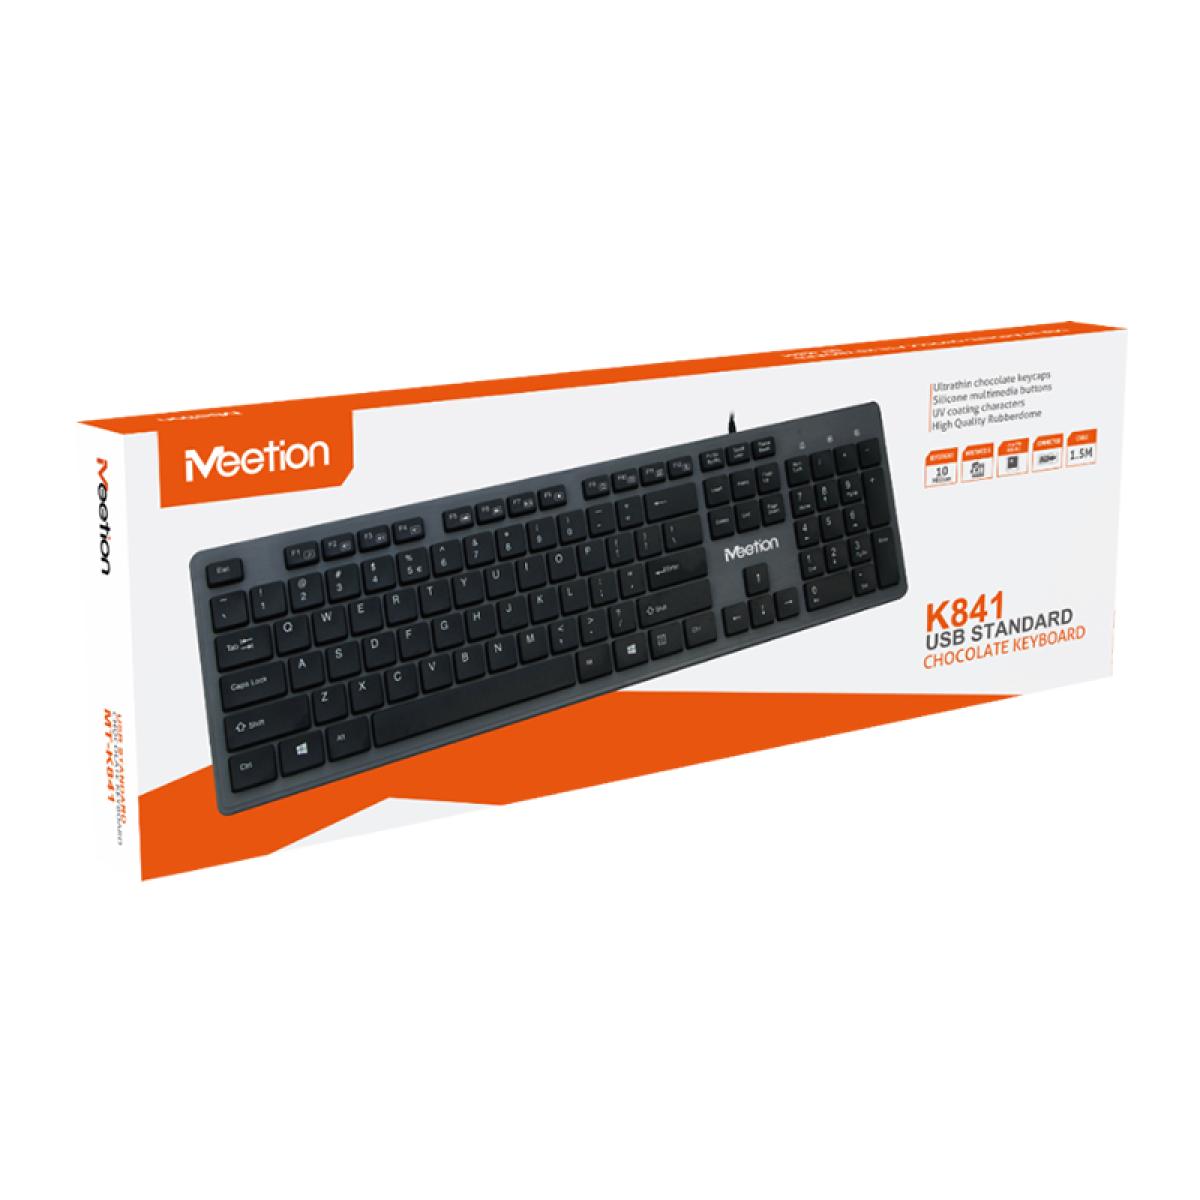 MeeTion USB Standard Chocolate Keyboard